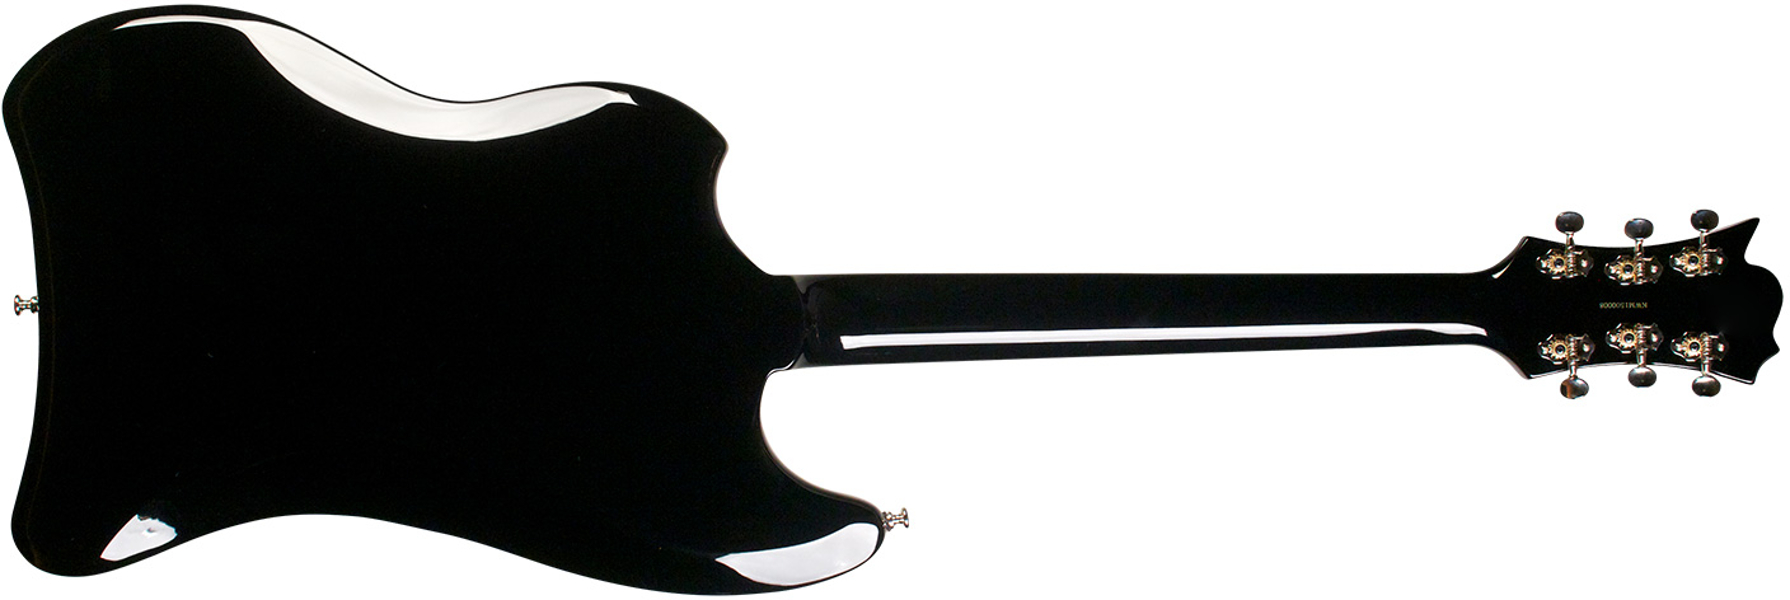 Guild S-200 T-bird - Noir - Retro rock electric guitar - Variation 3